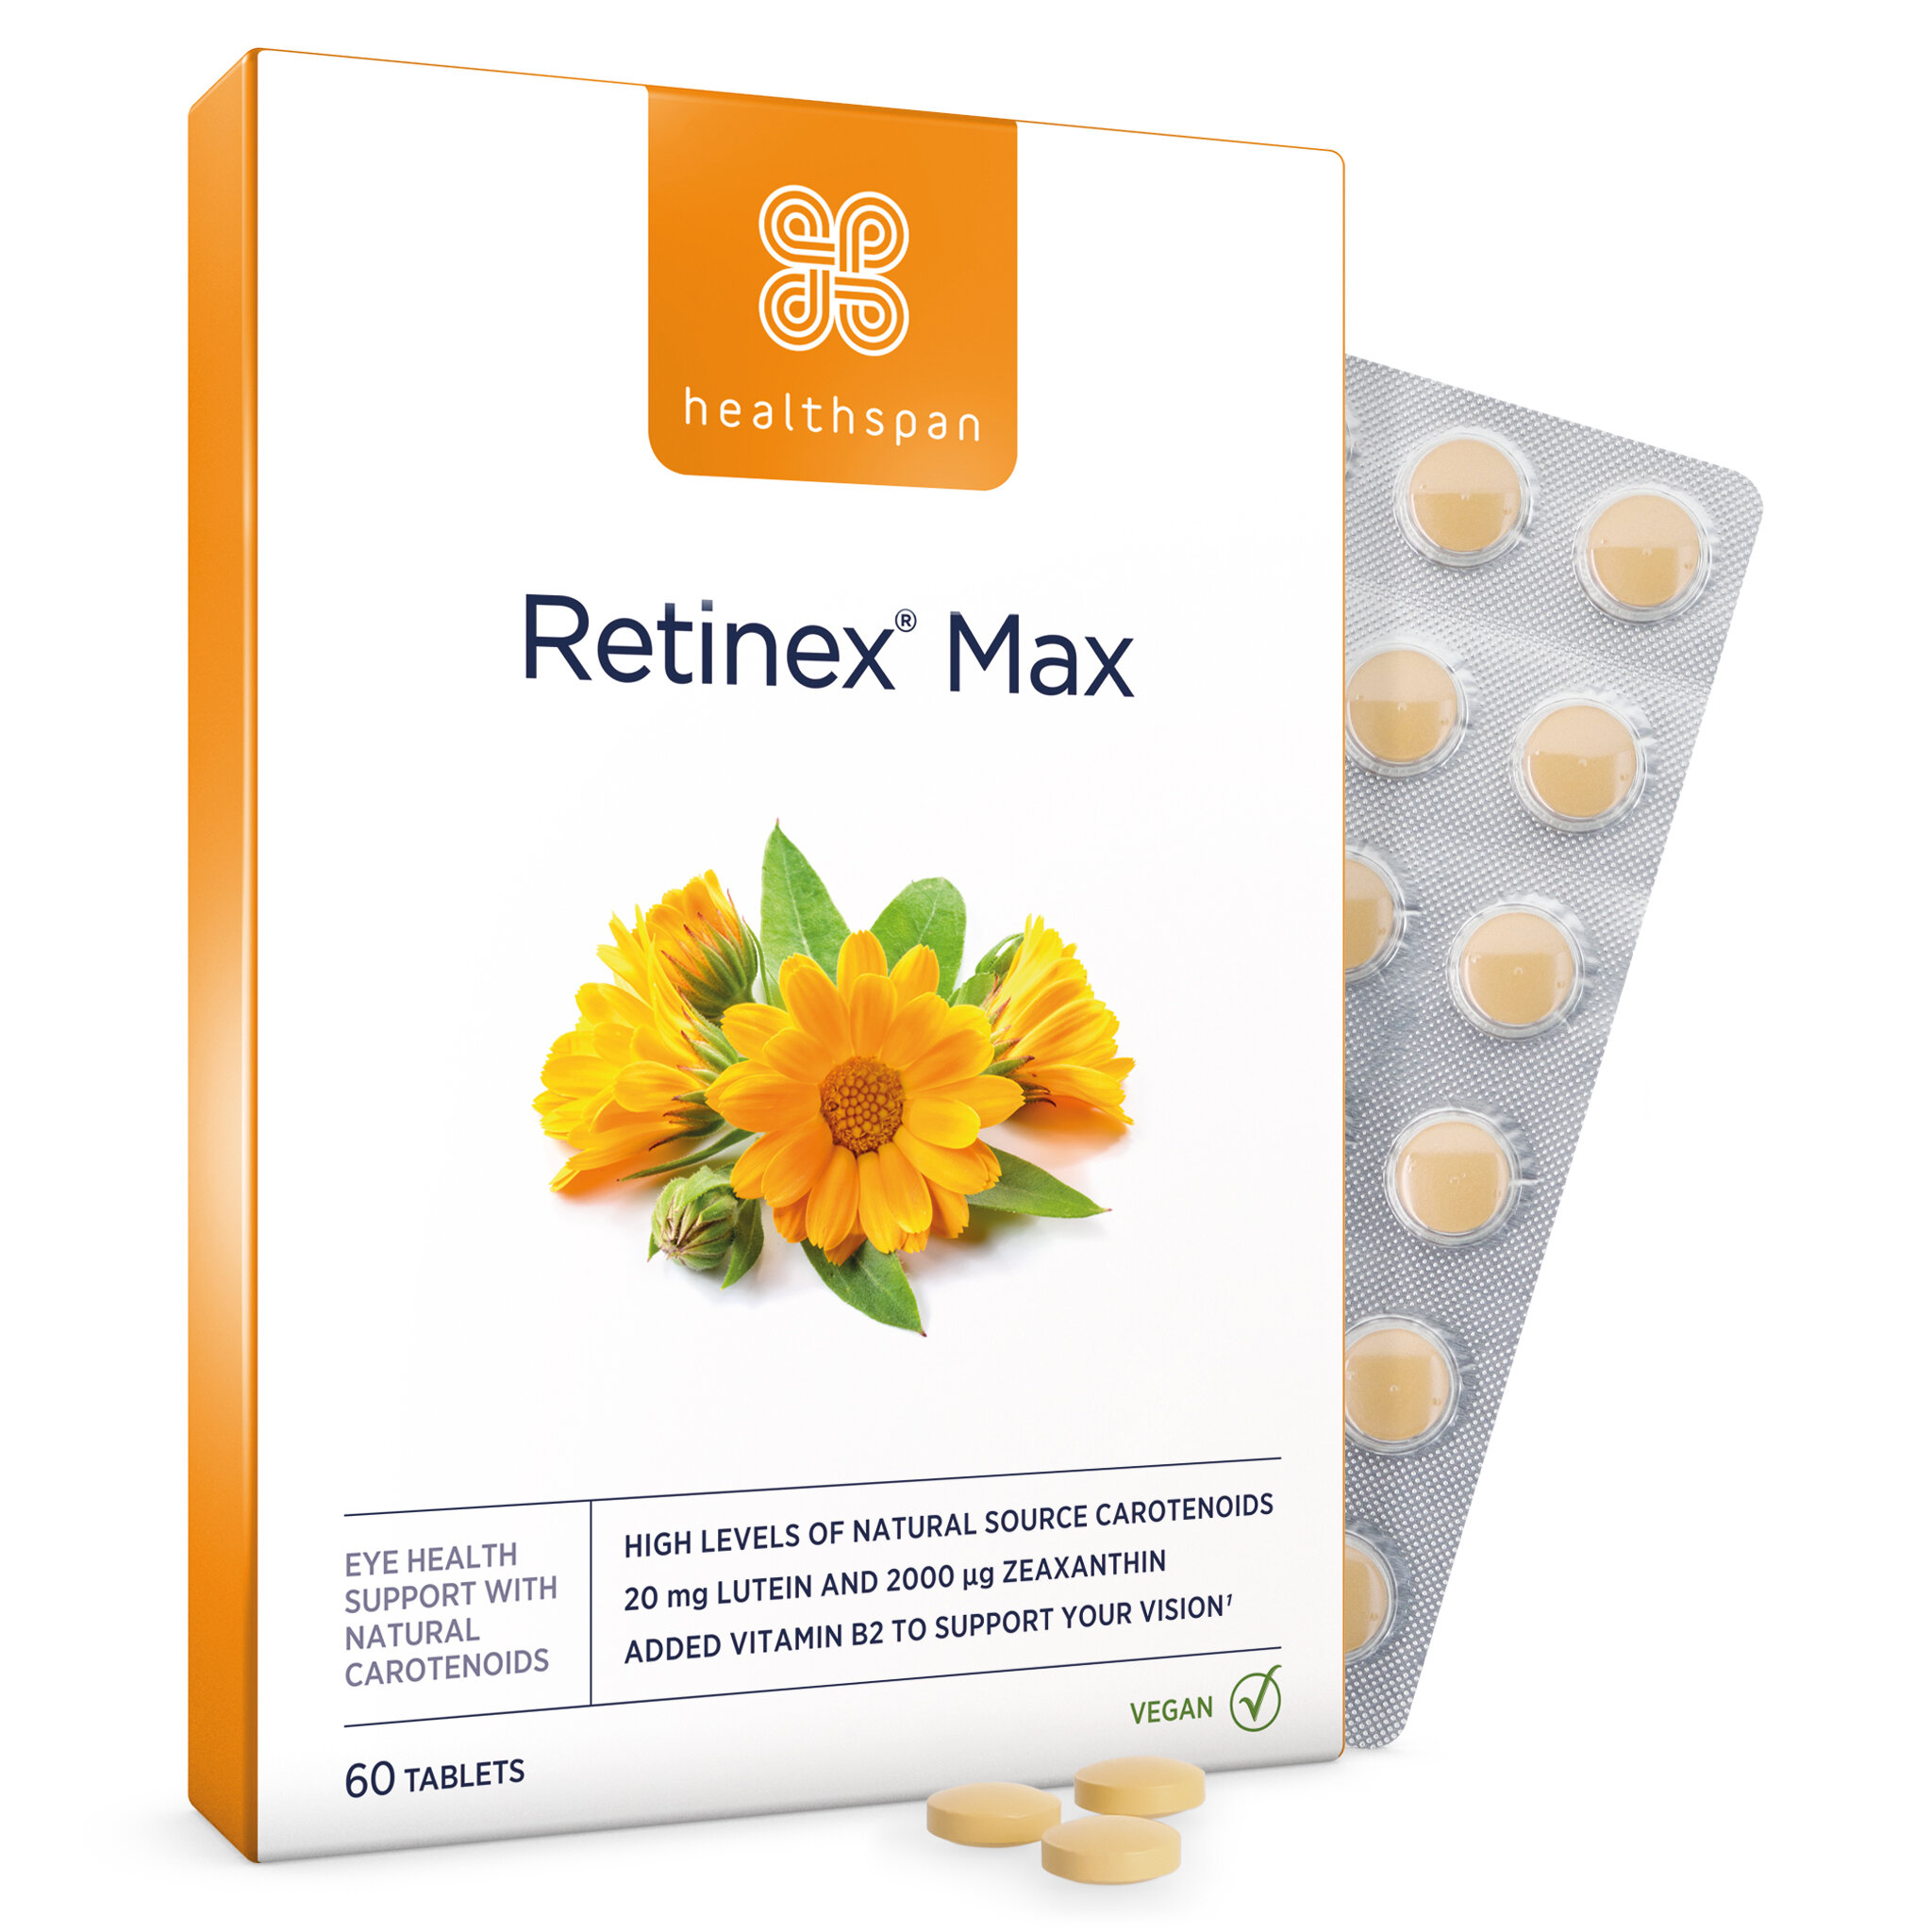 Healthspan Retinex Max, 60 Tablets, Eye Health, 20mg Lutein, Vegan